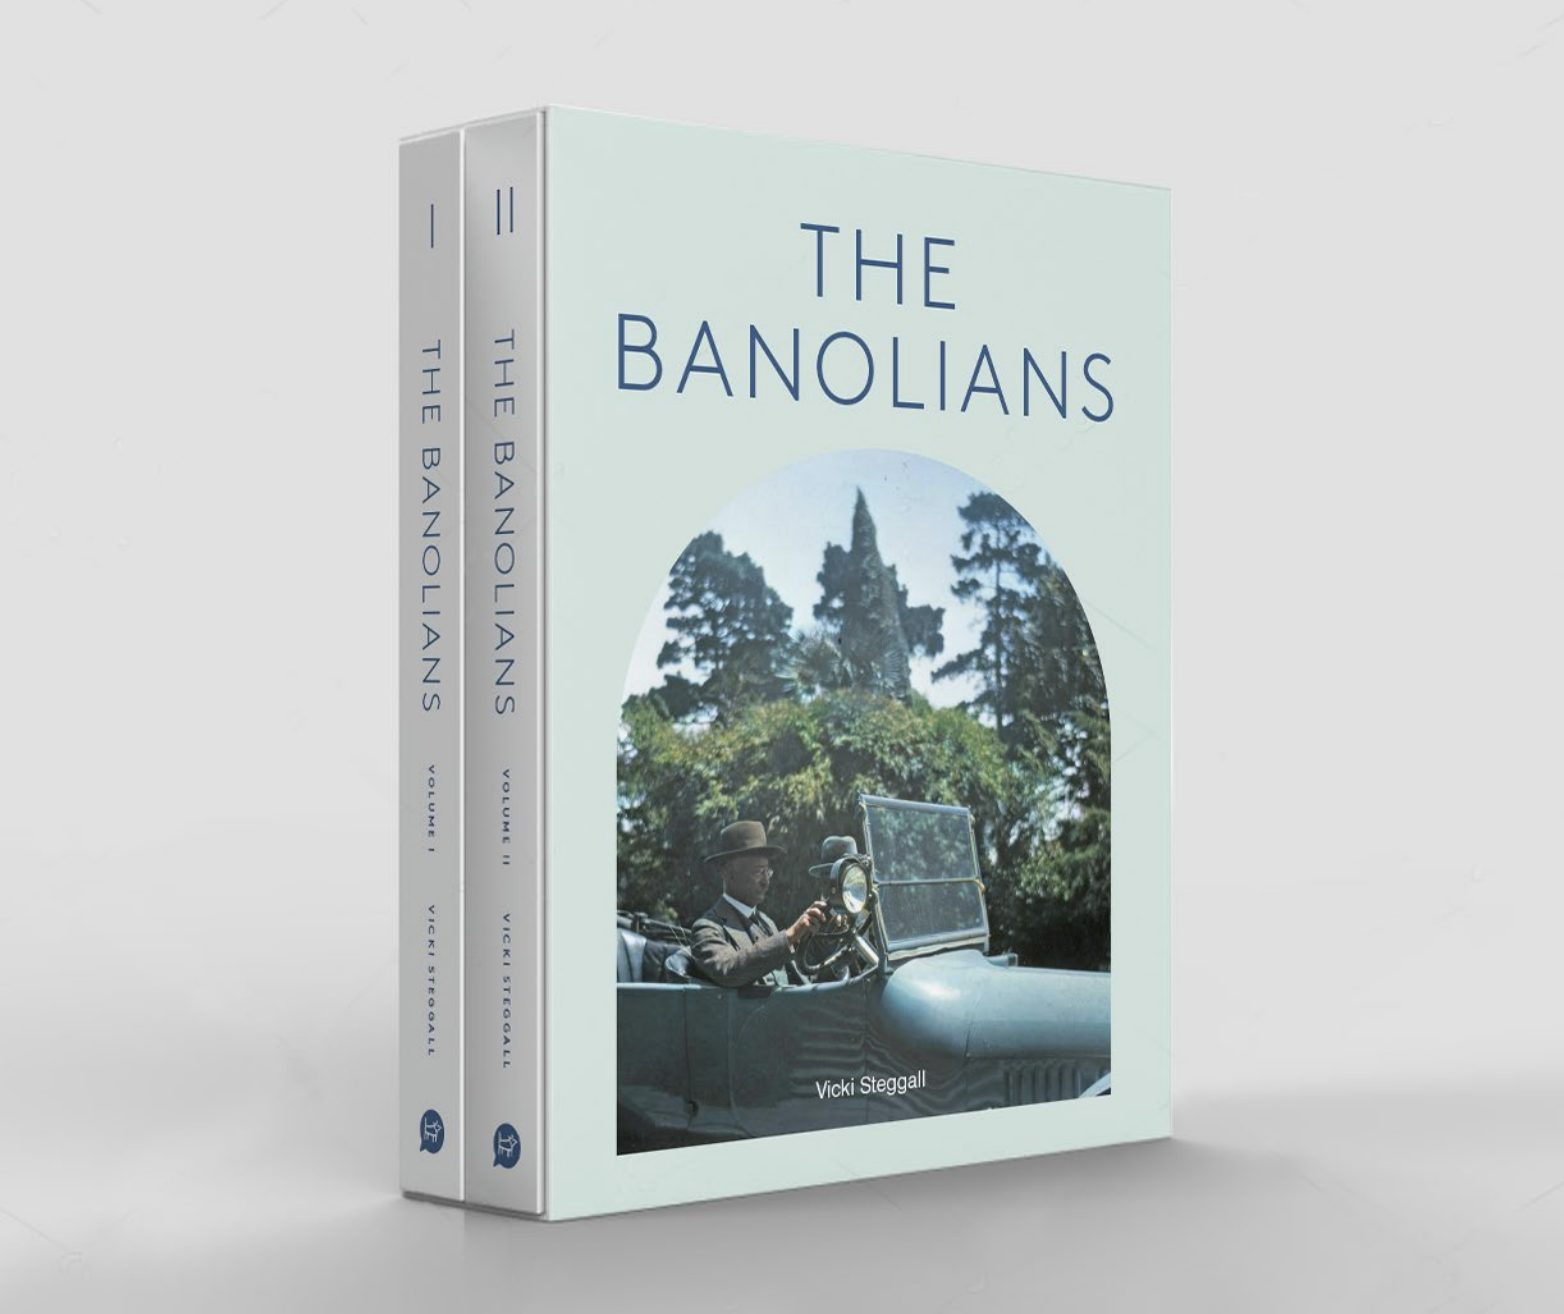 https://www.vickisteggall.com.au/book/the-banolians/